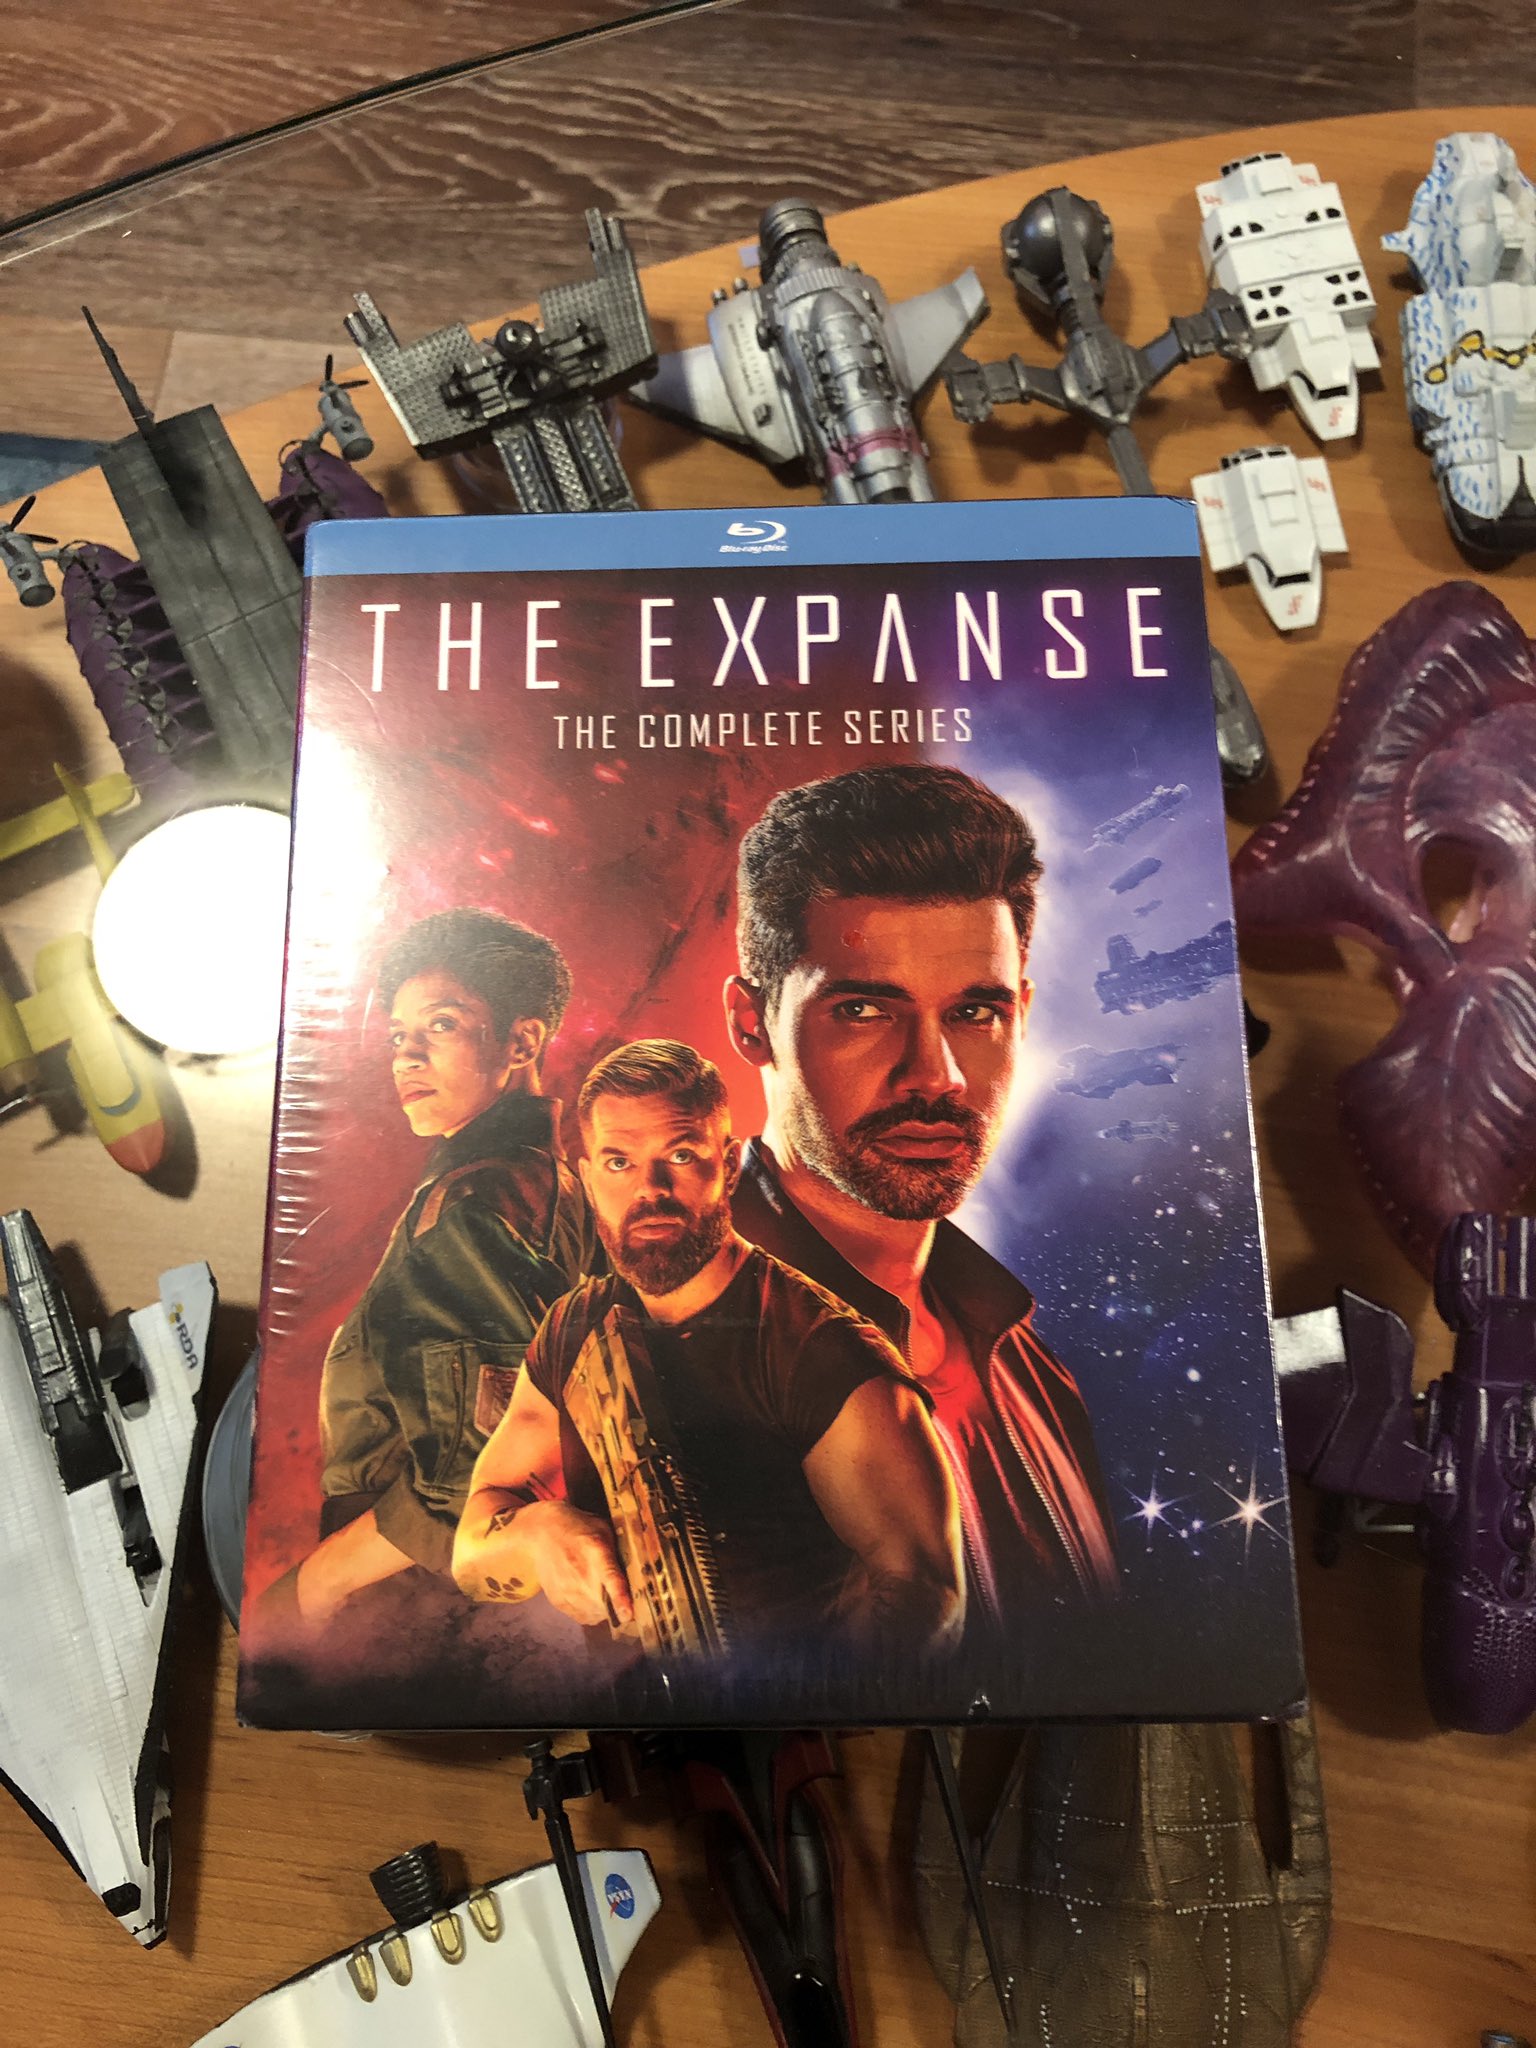 The Expanse: Season 5 [Blu-ray]